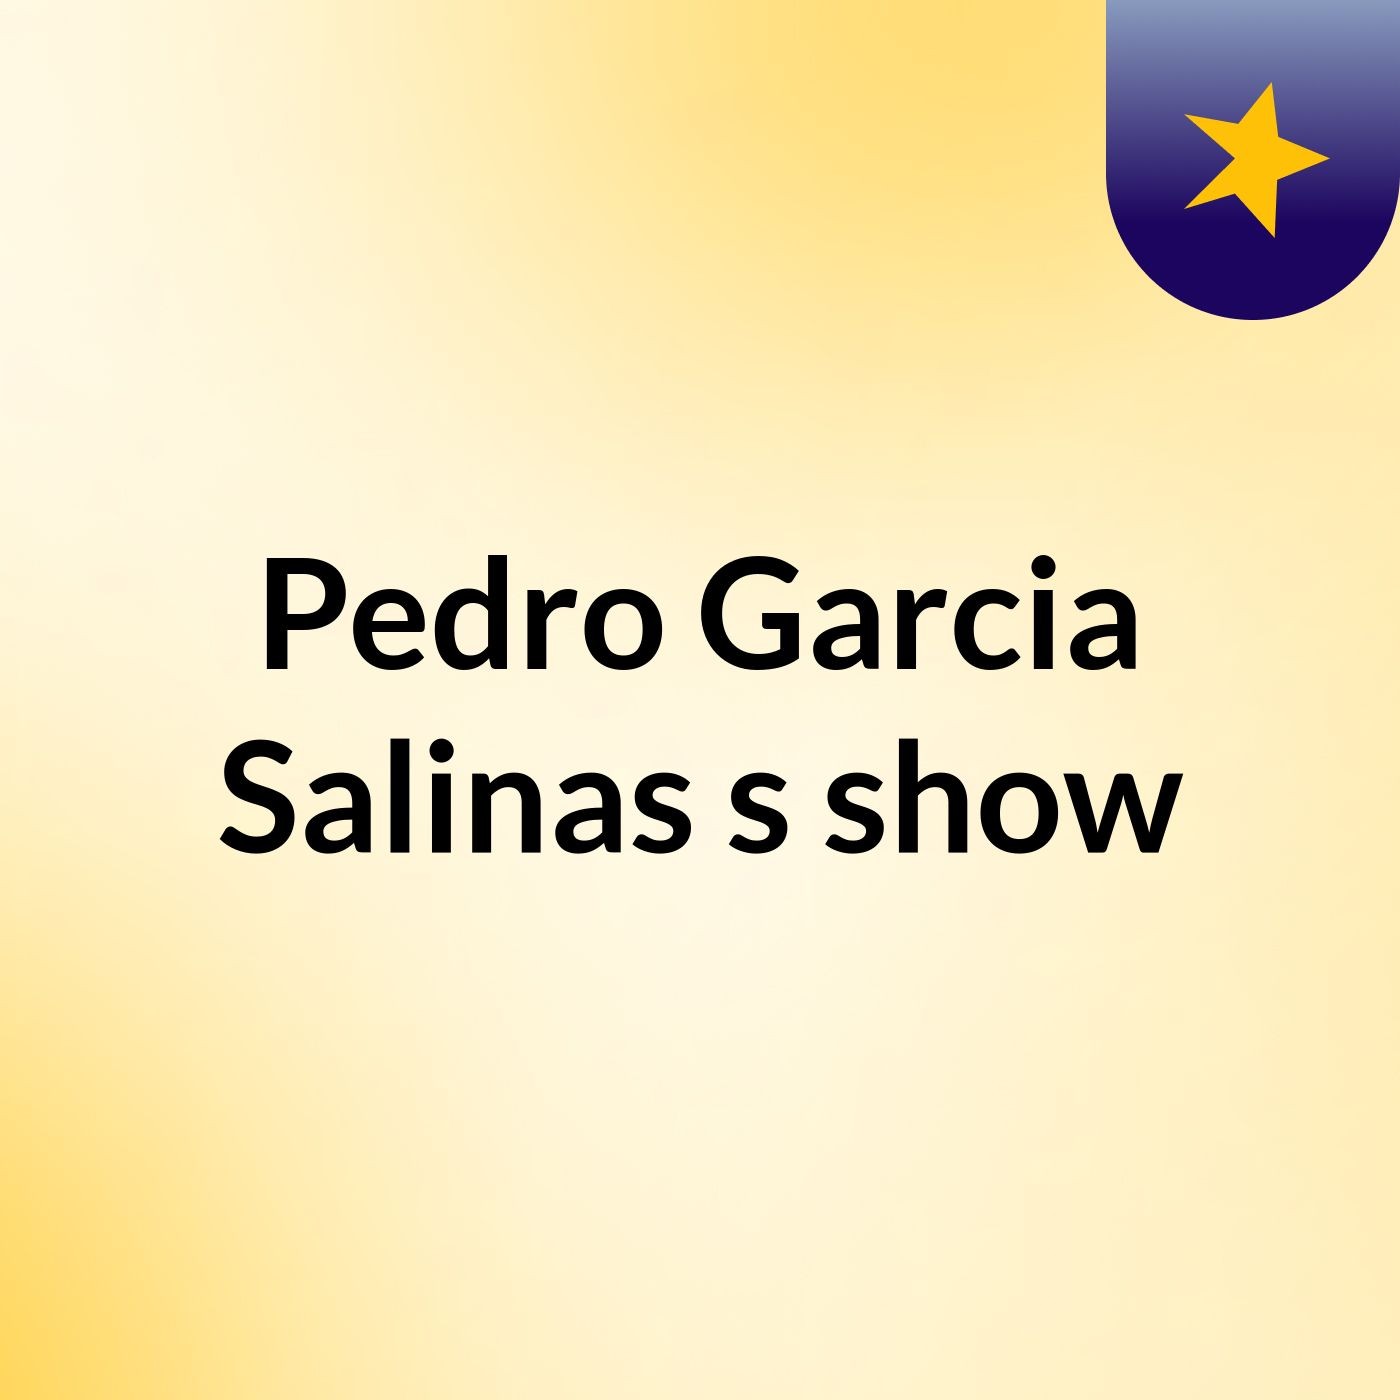 Pedro Garcia Salinas's show